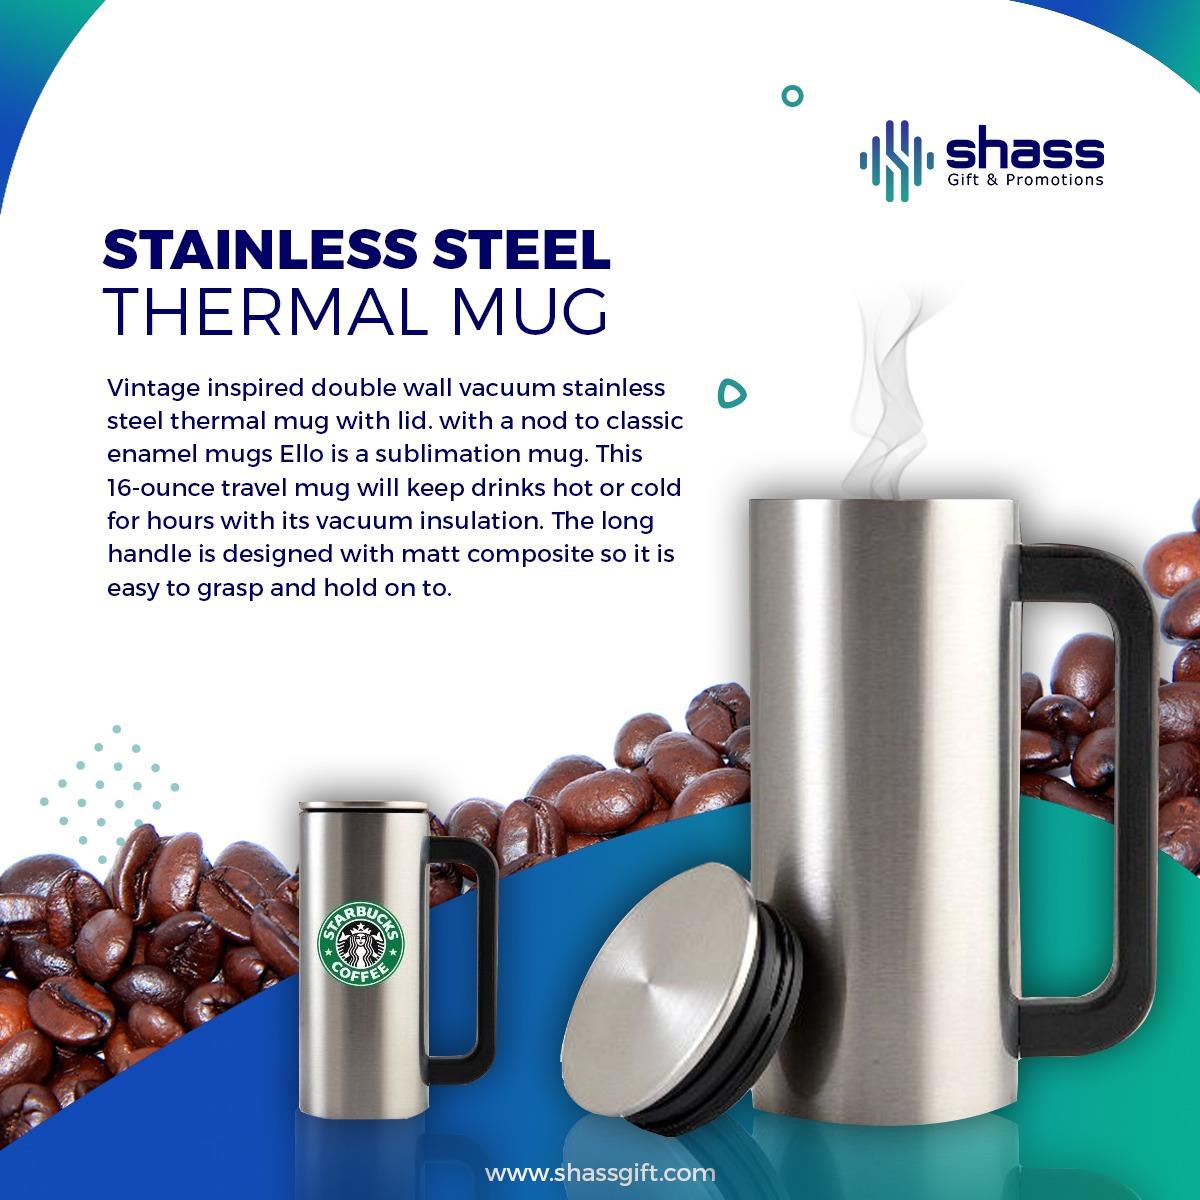 Stainless Steel Thermal Mug